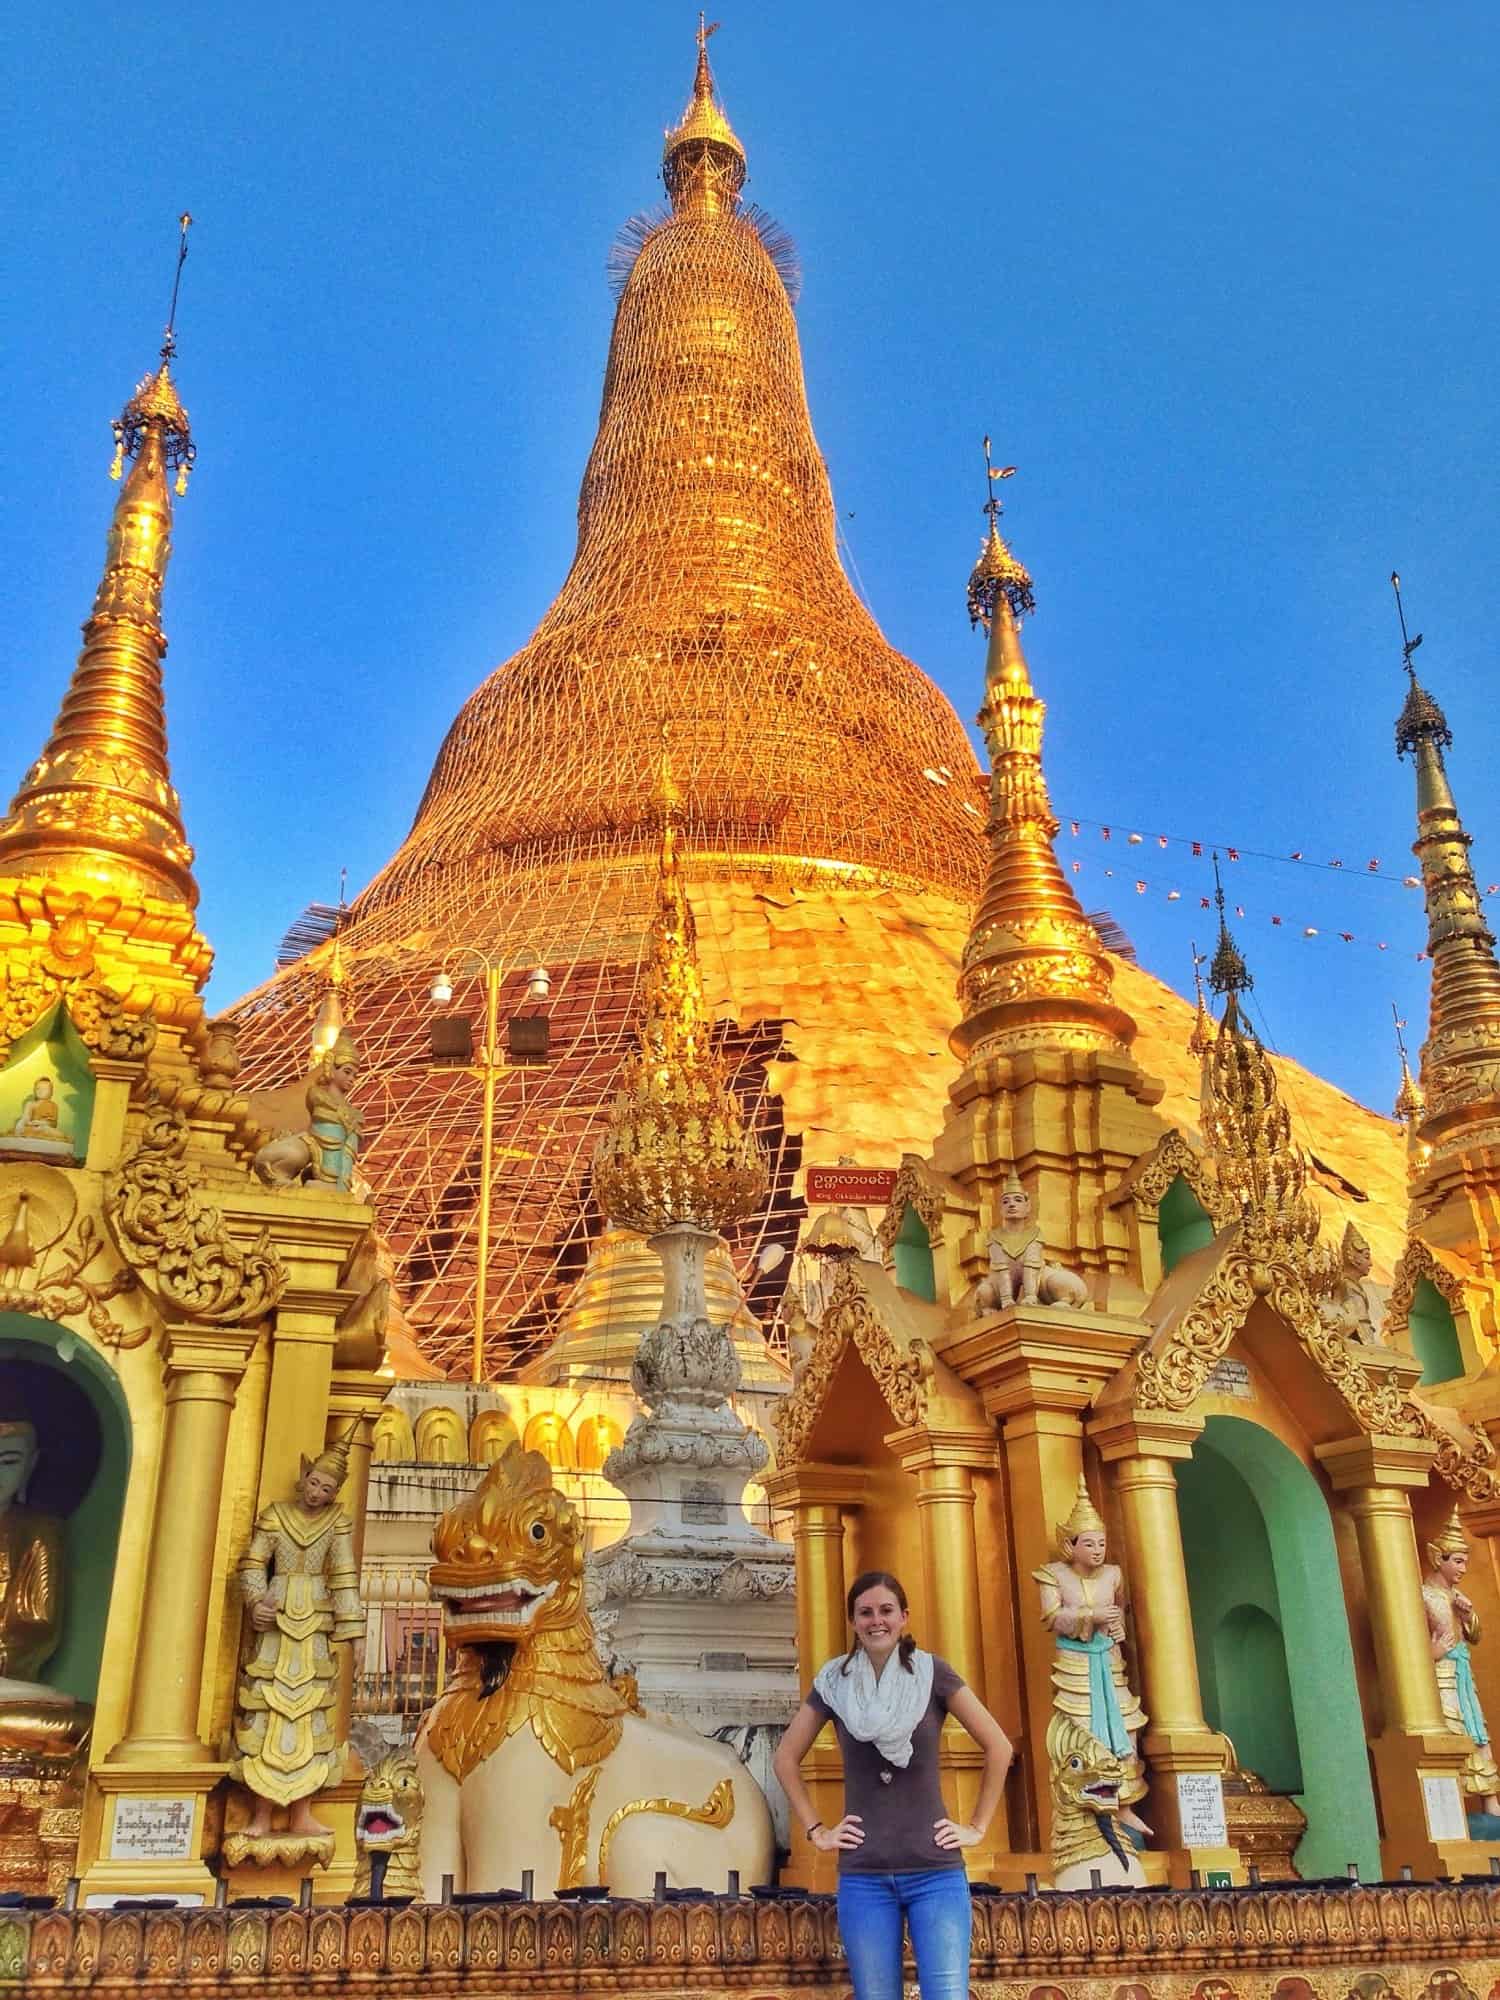 Lauren at Shwedagon Pagoda